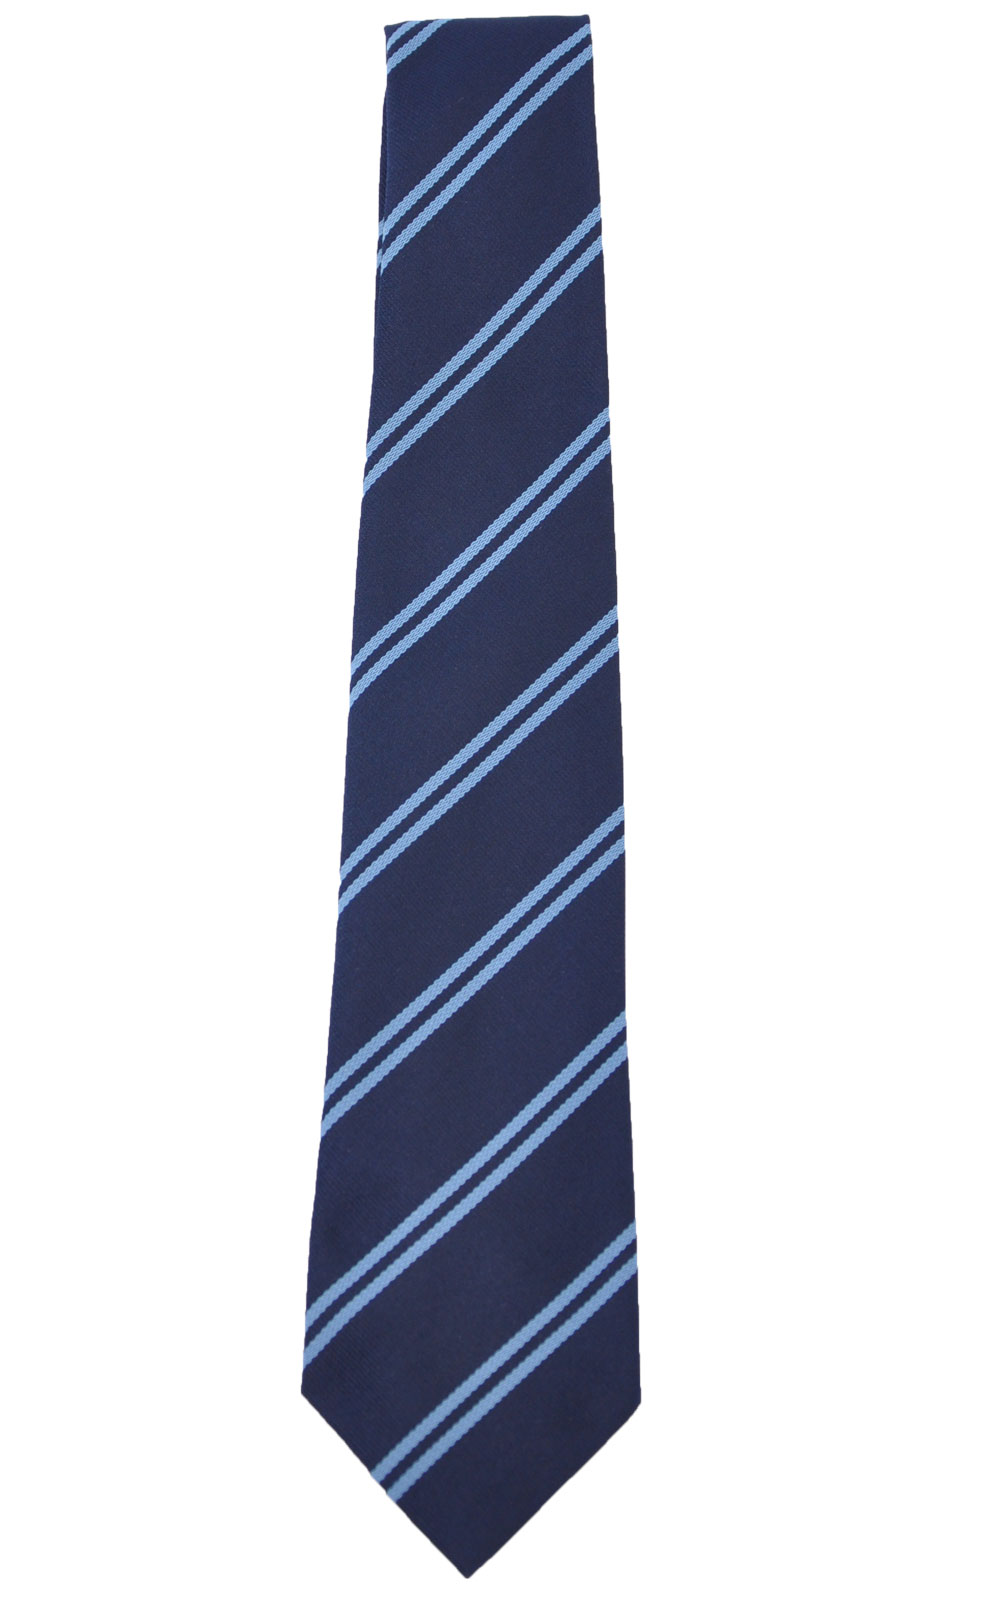 S&T Moore. Ballymoney High School Tie - Unicol